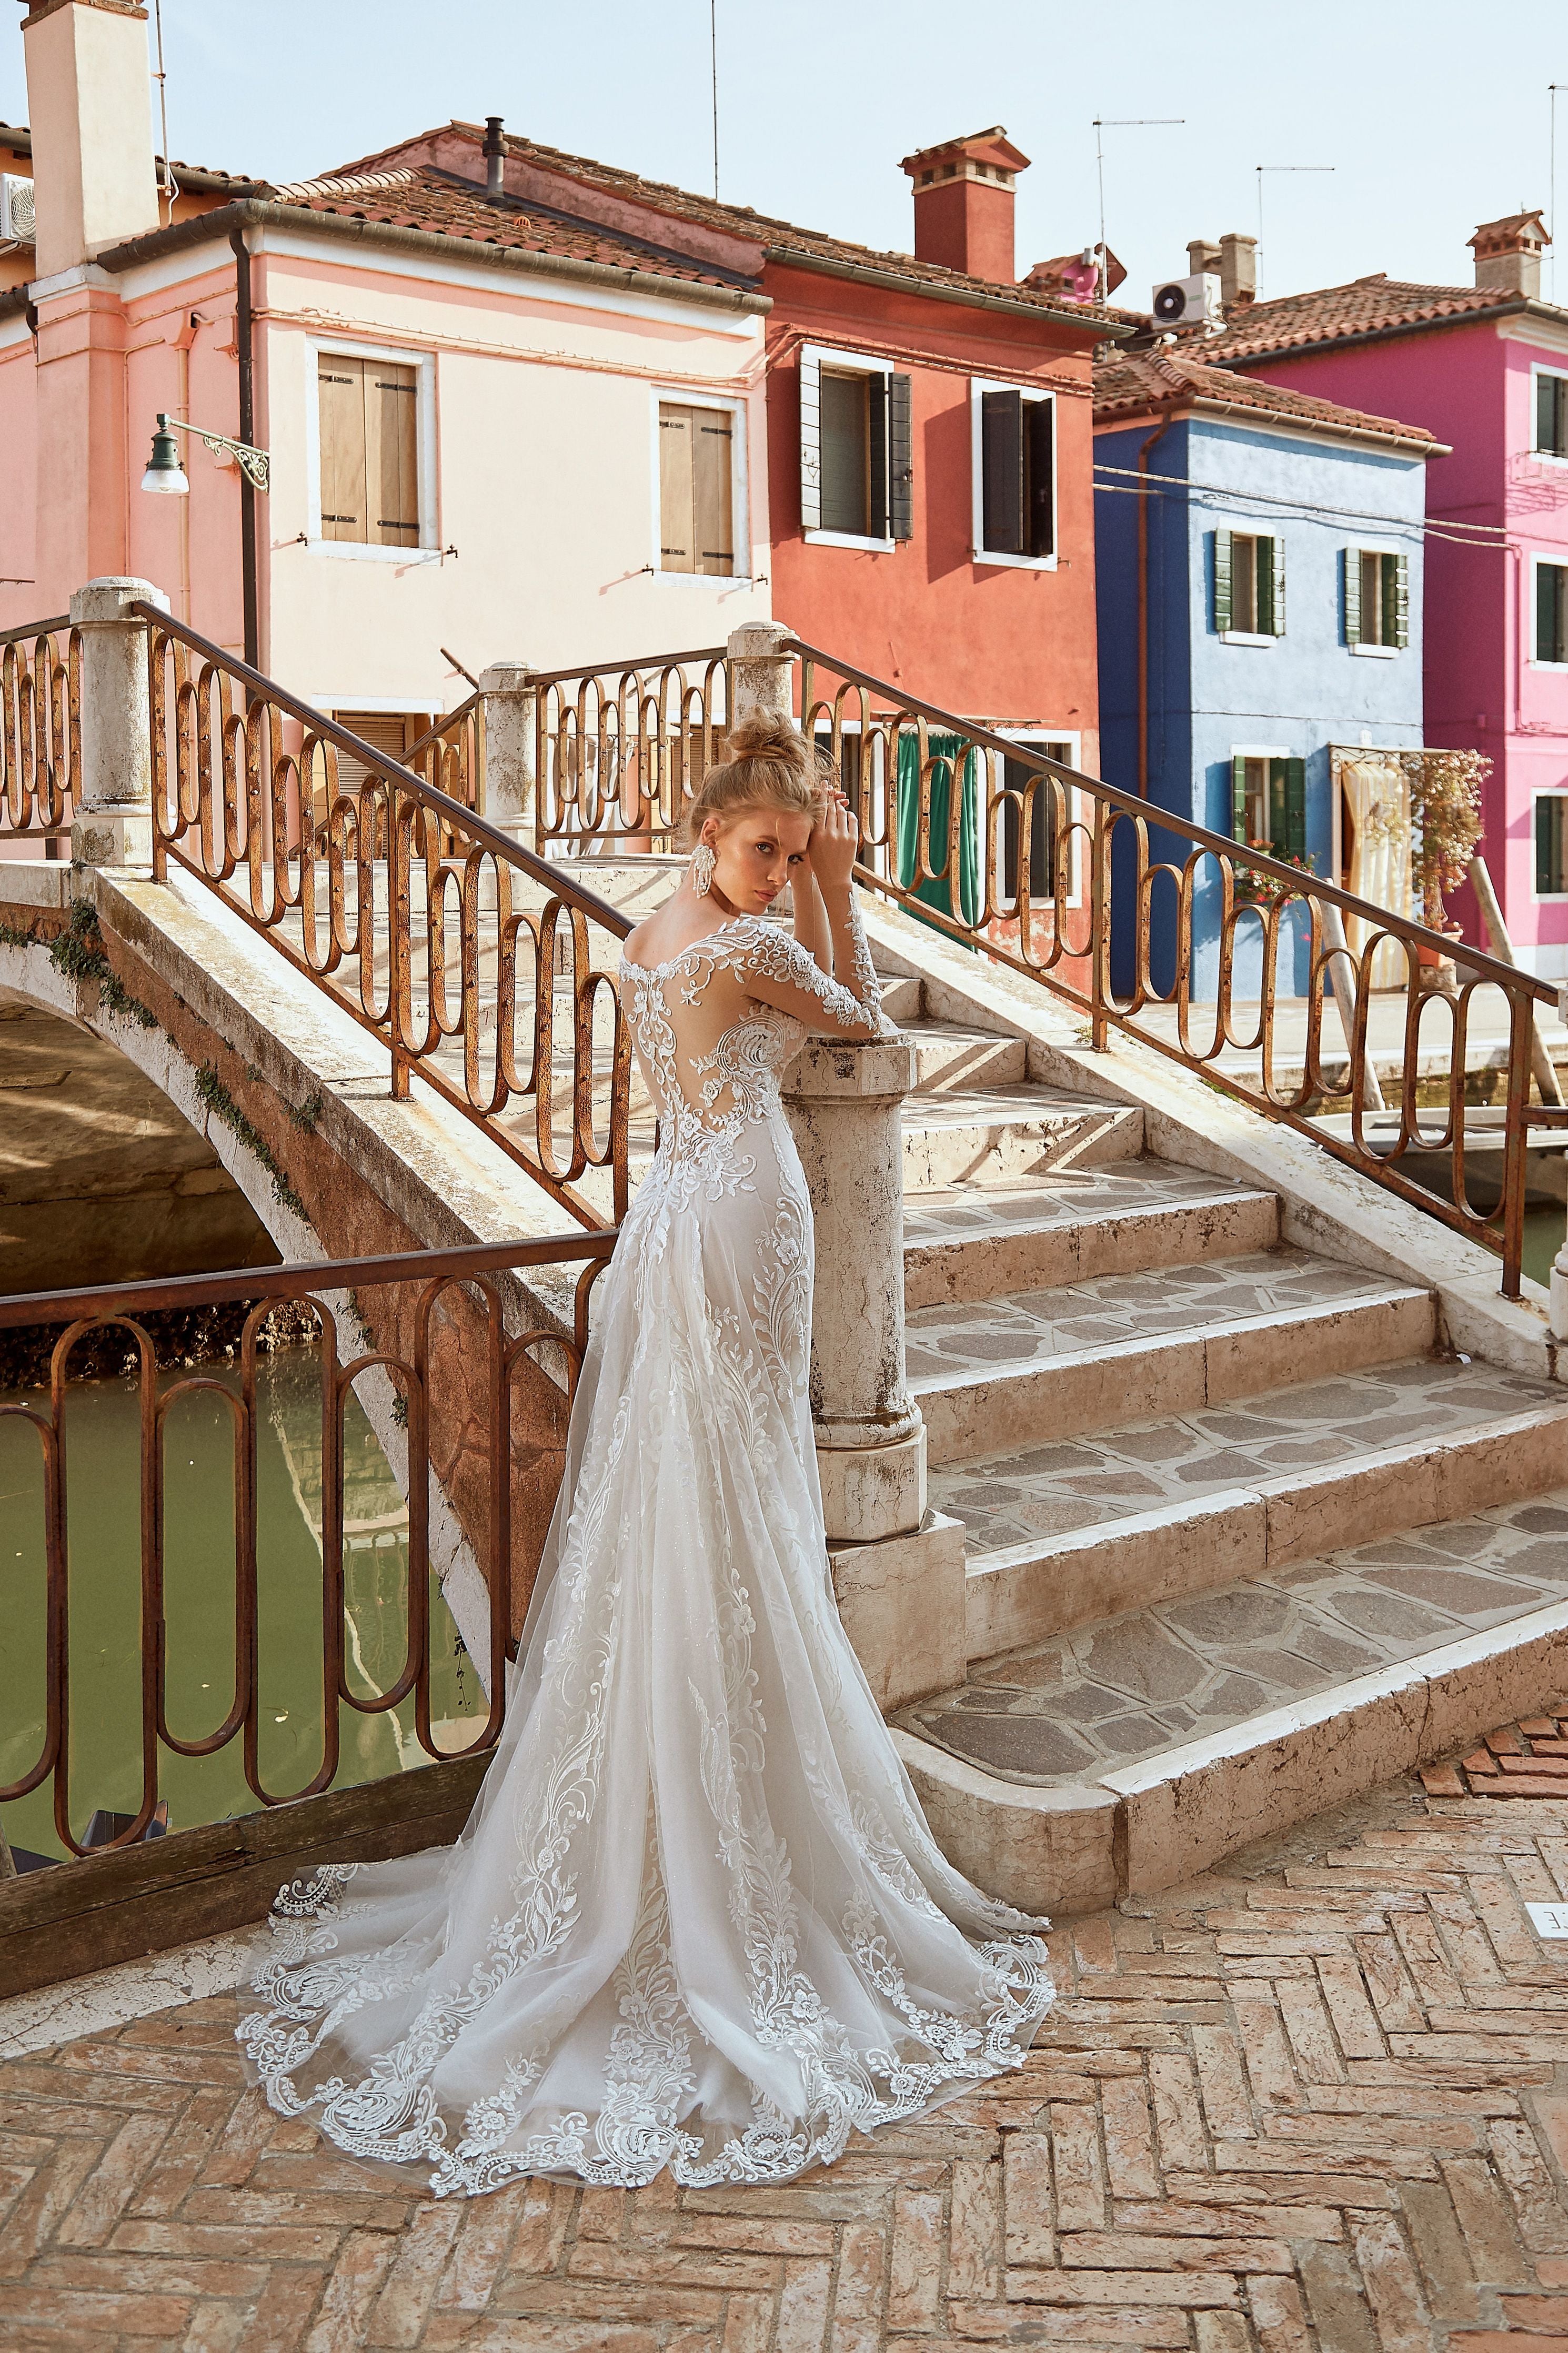 Christine - Floral Lace Long Sleeve Sheath Wedding Dress - Maxima Bridal